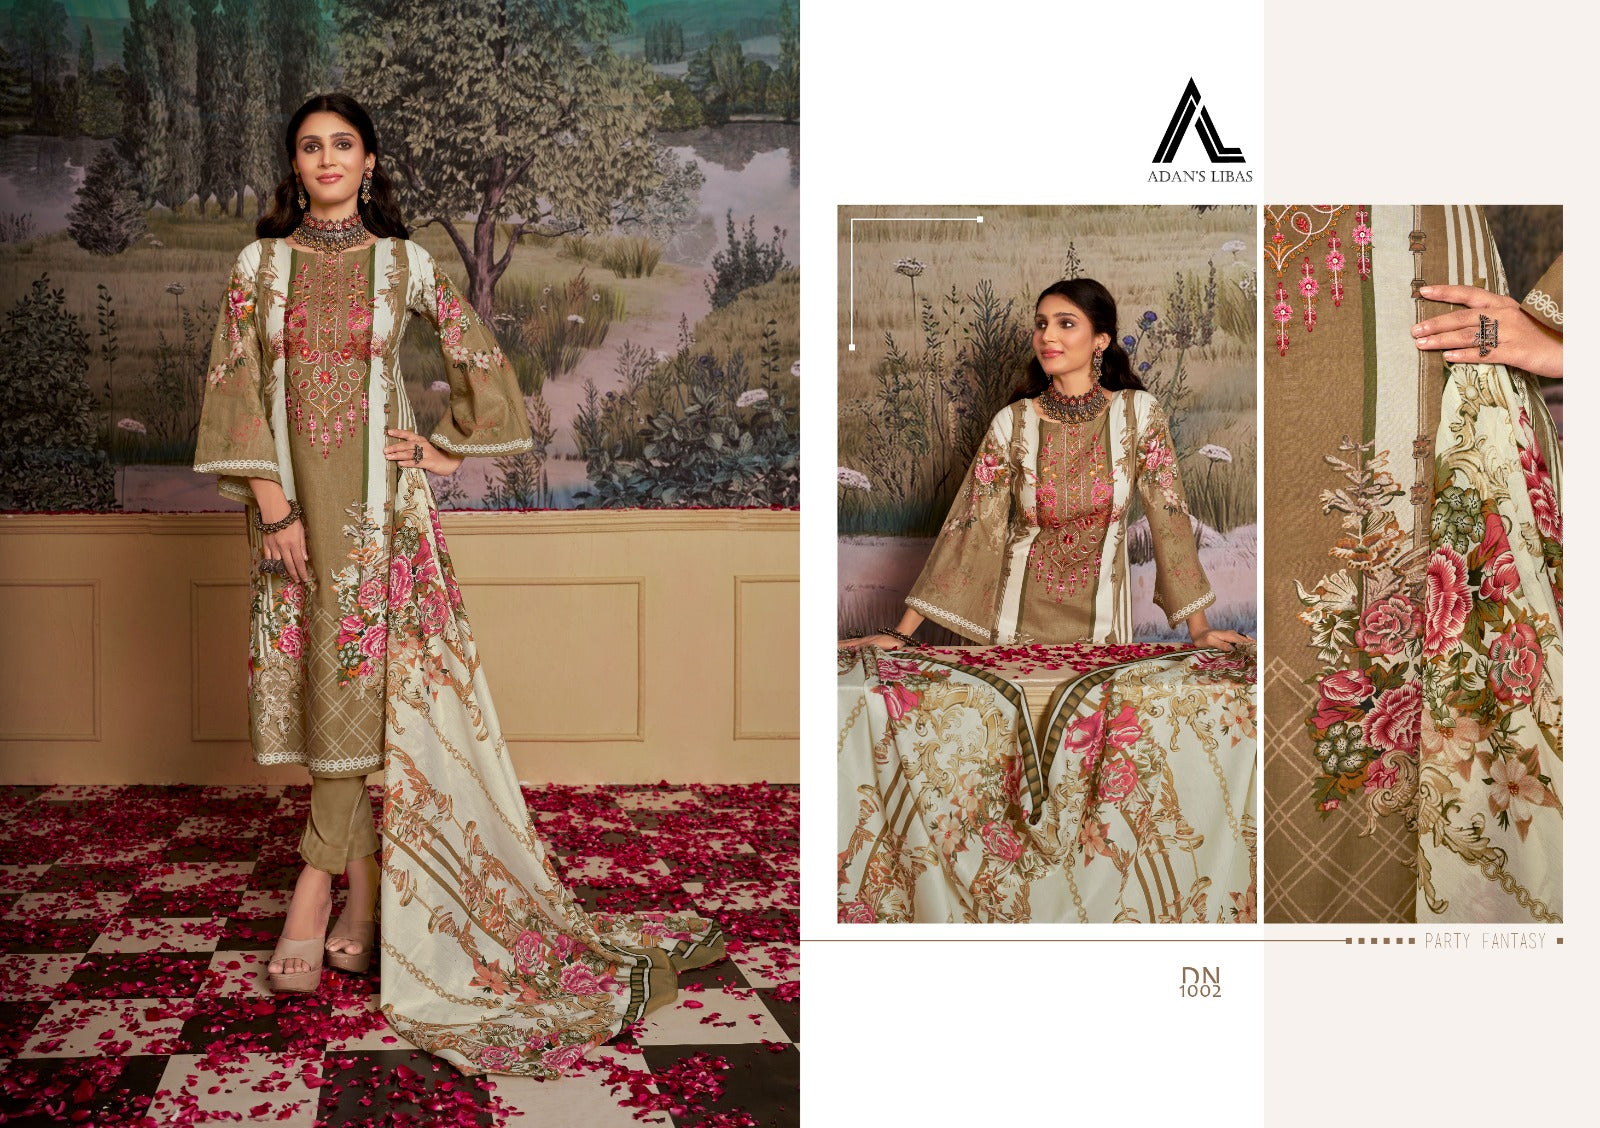 Adans Libas naira vol 27 Cotton With Embroidery Work Pakistani Dress Material Wholesaler - jilaniwholesalesuit